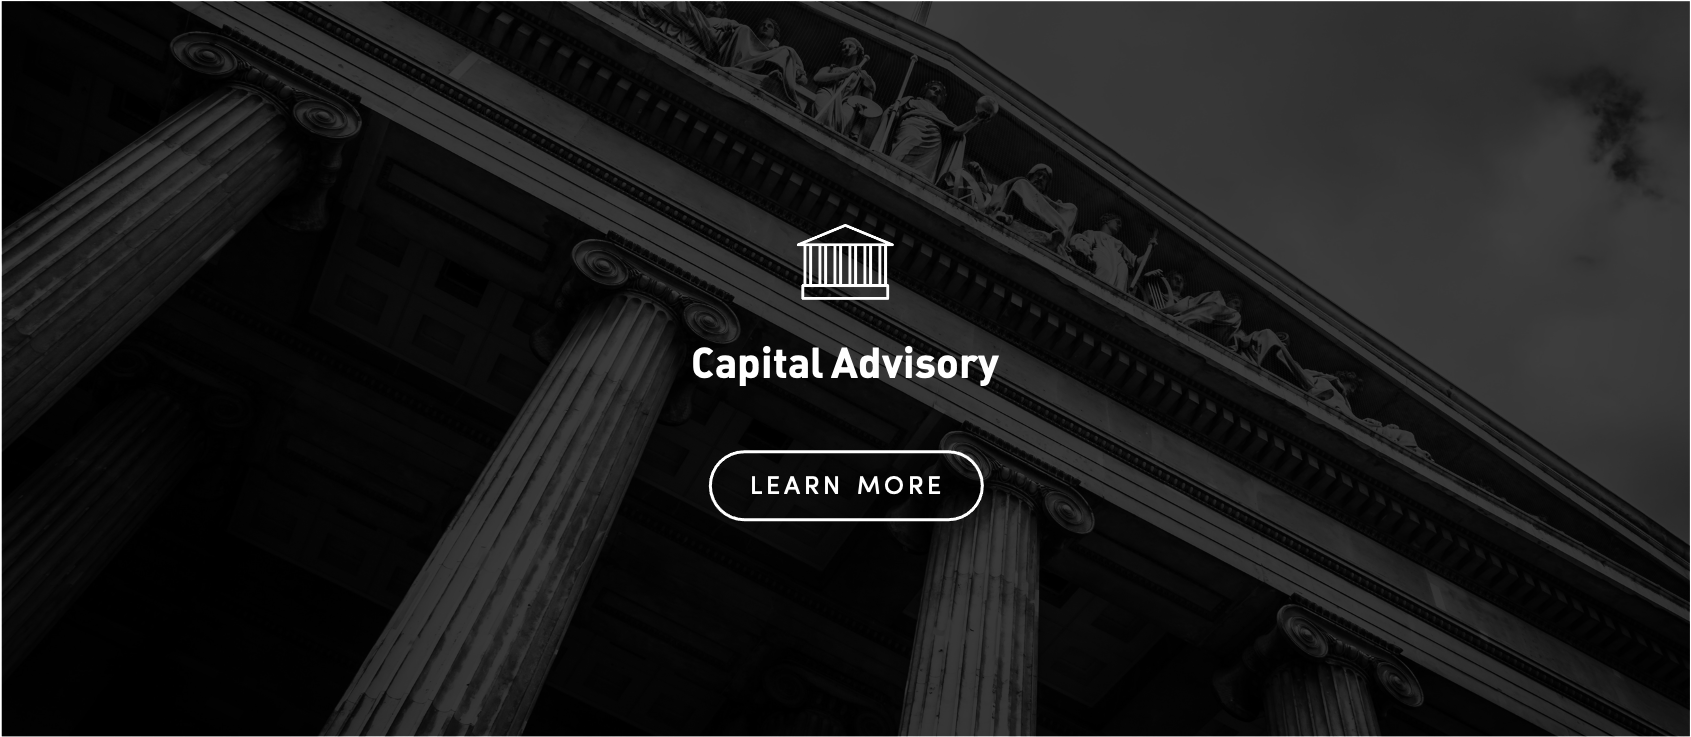 Capital Advisory Capabilities.png